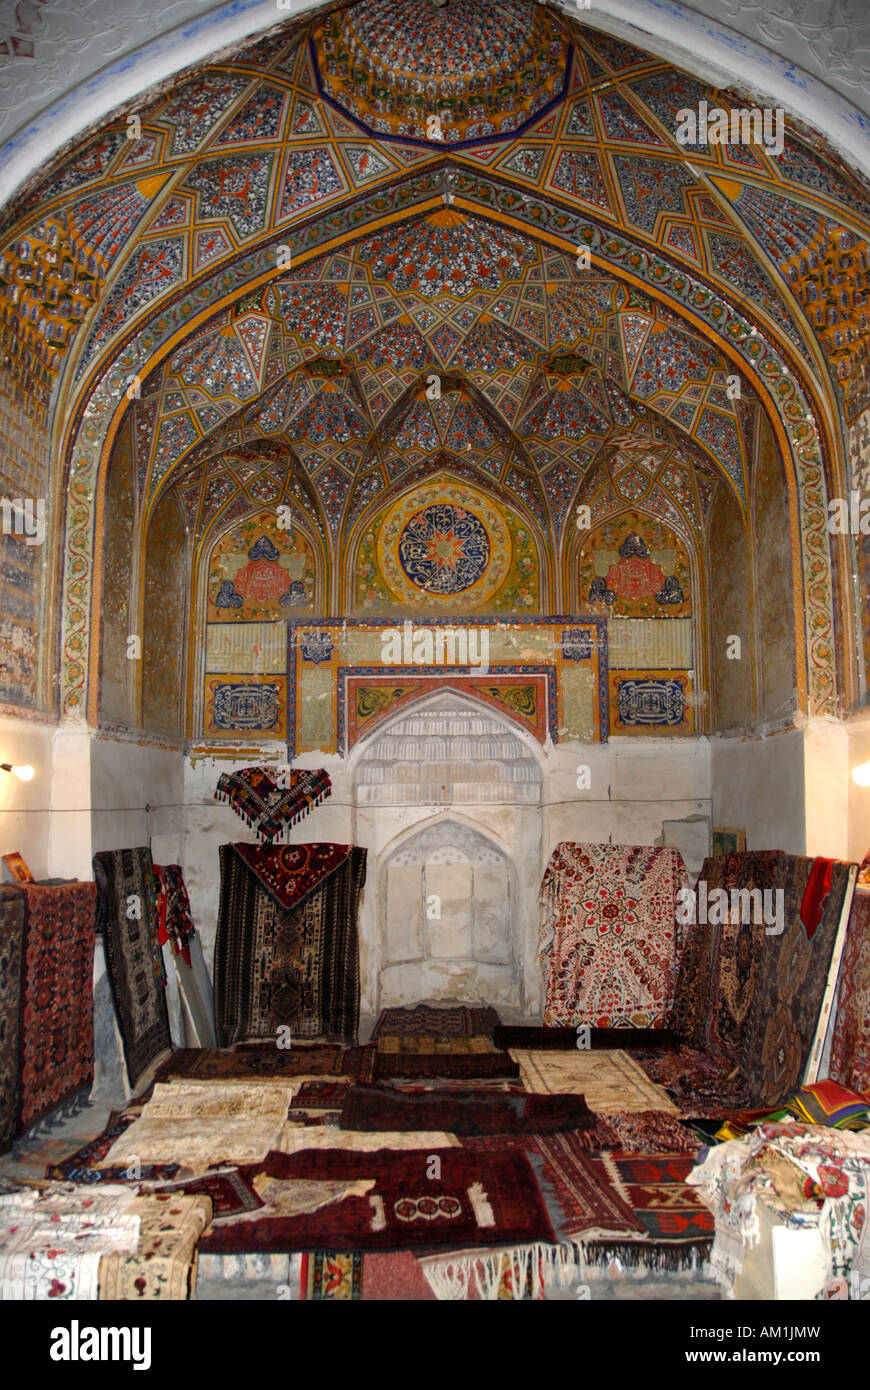 Decorated arch with mihrab now shop selling suzani and carpets in Khanaka Nadir Divan-Begi Lyab-i Hauz Bukhara Uzbekistan Stock Photo